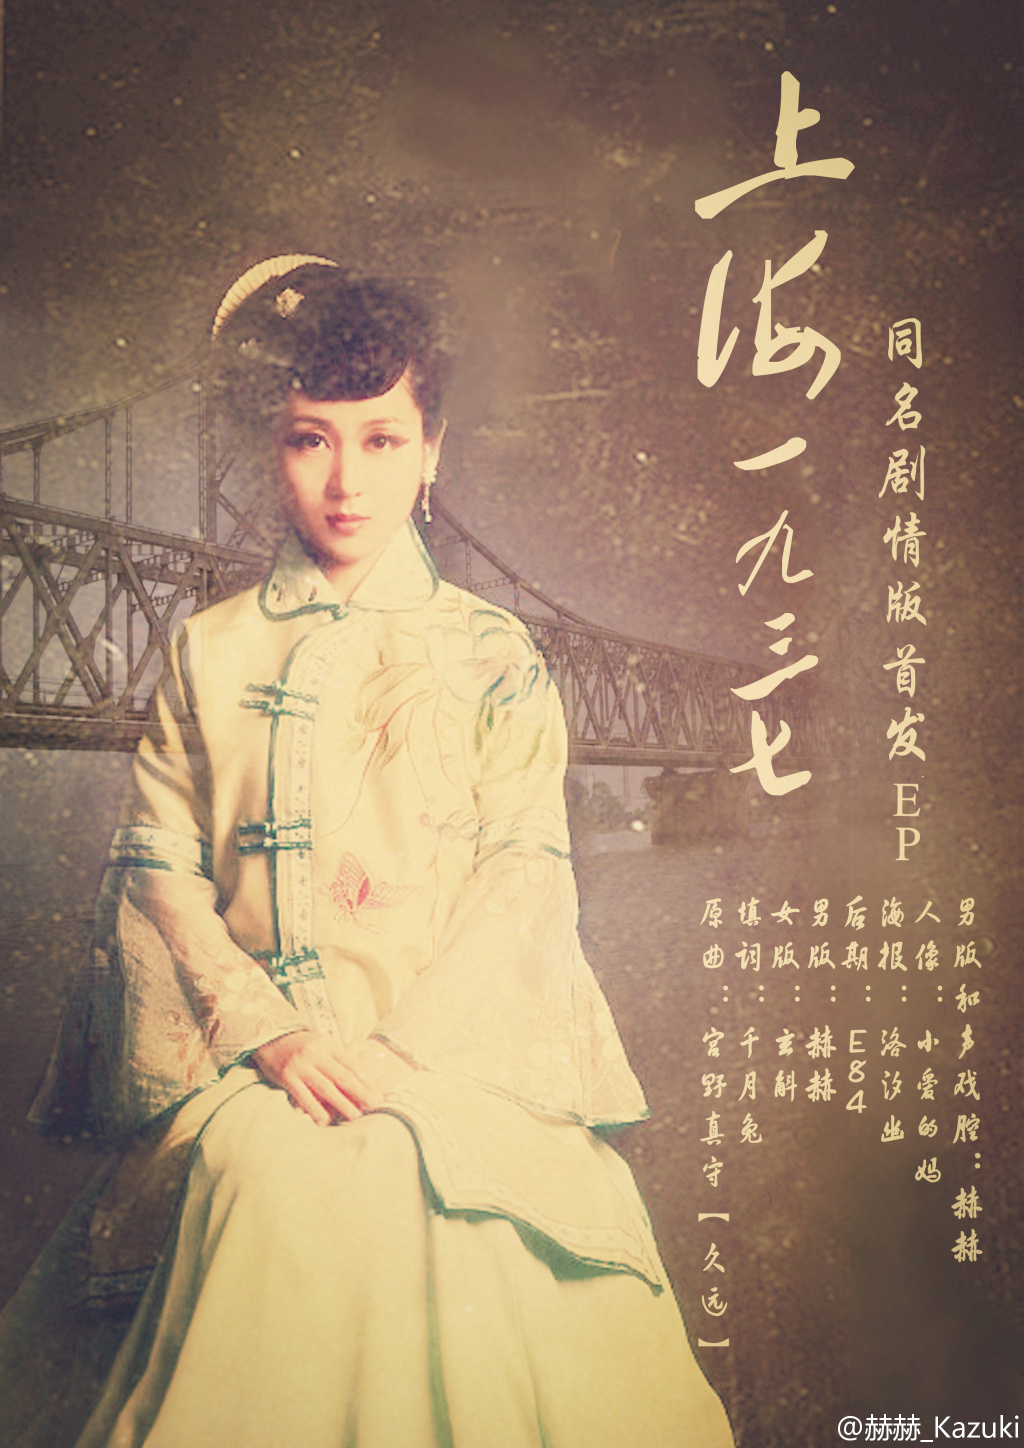 shang hai 1937 chun ge ban